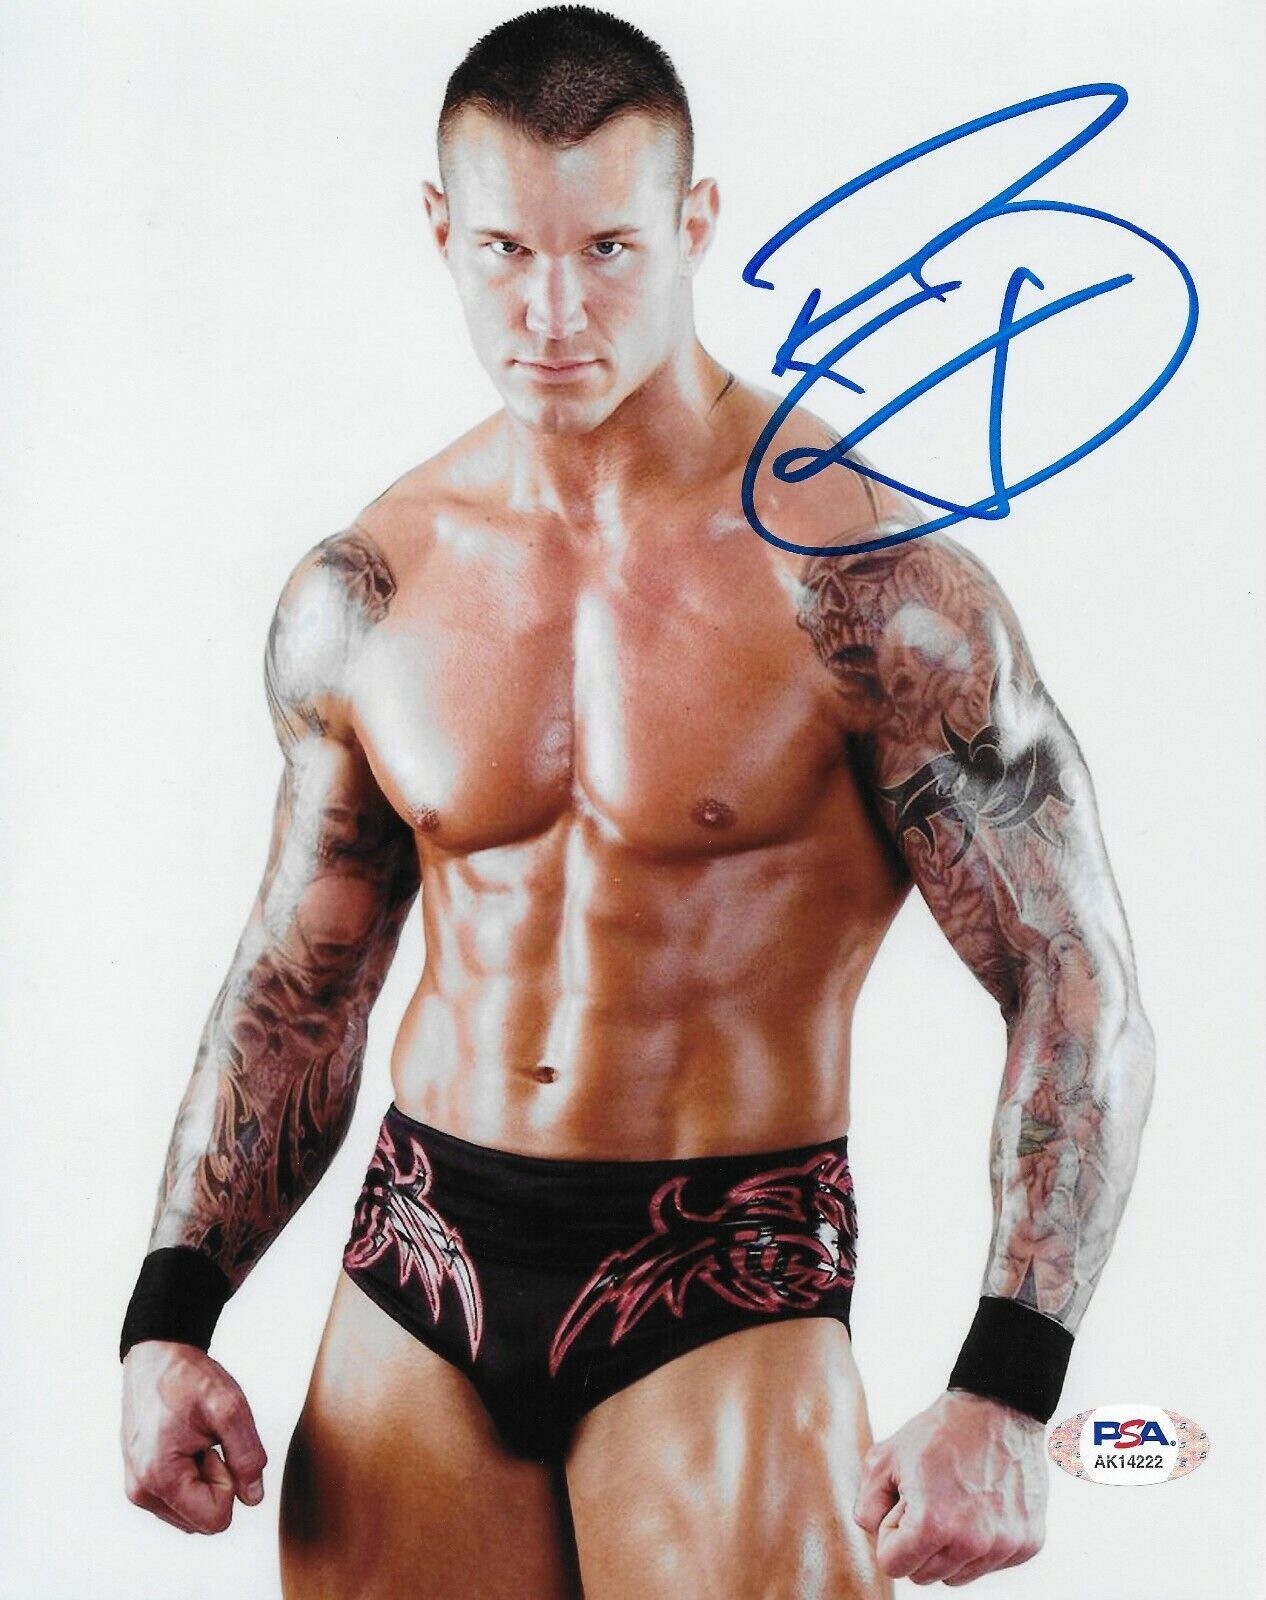 Randy Orton WWE Signed Autograph 8x10 Photo Poster painting #18 w/ PSA COA